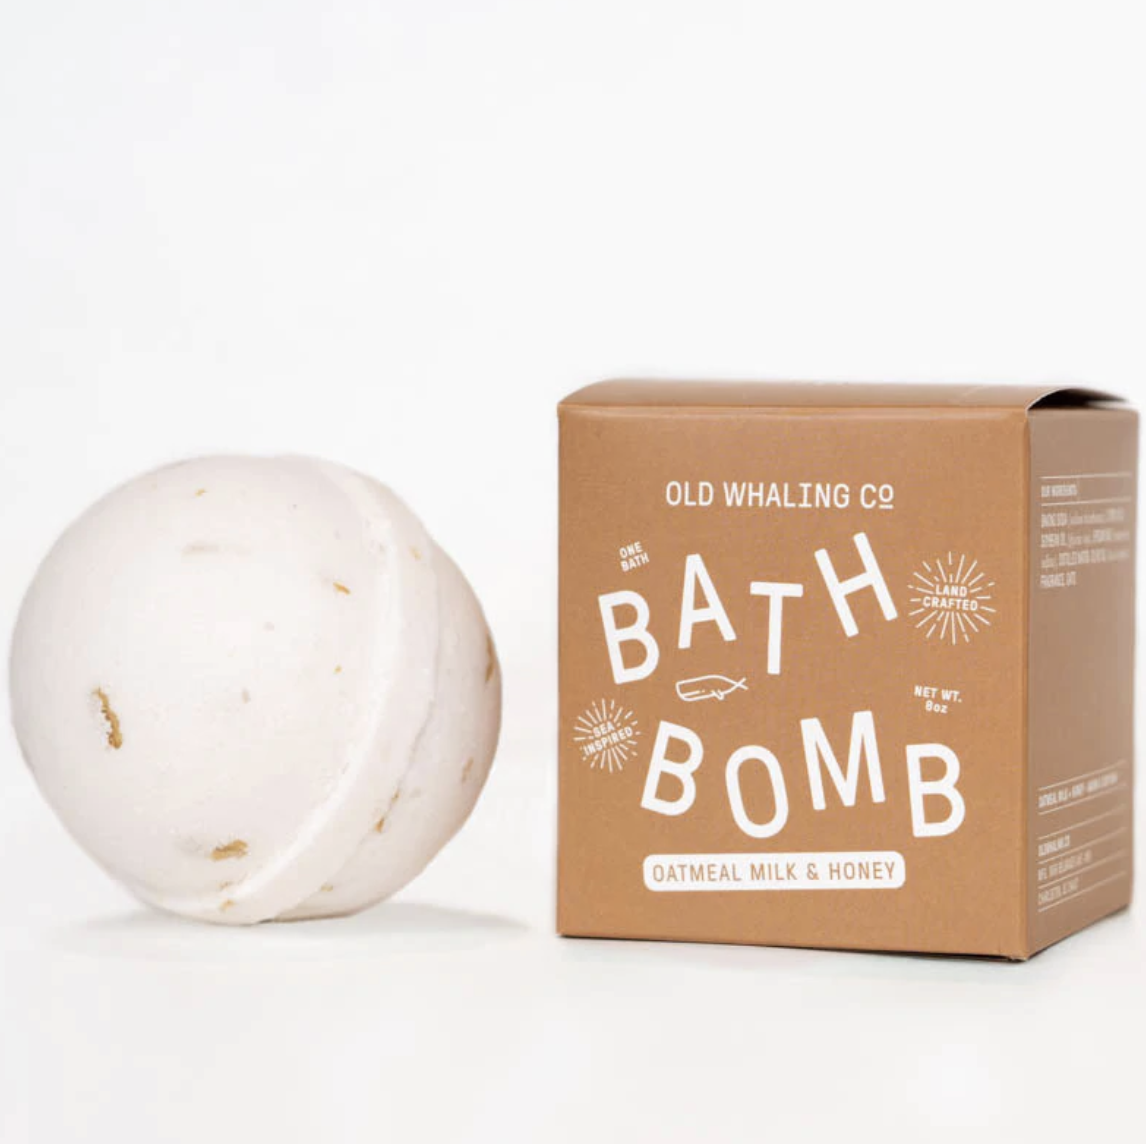 White round bath bomb next to a brown box with white writing.